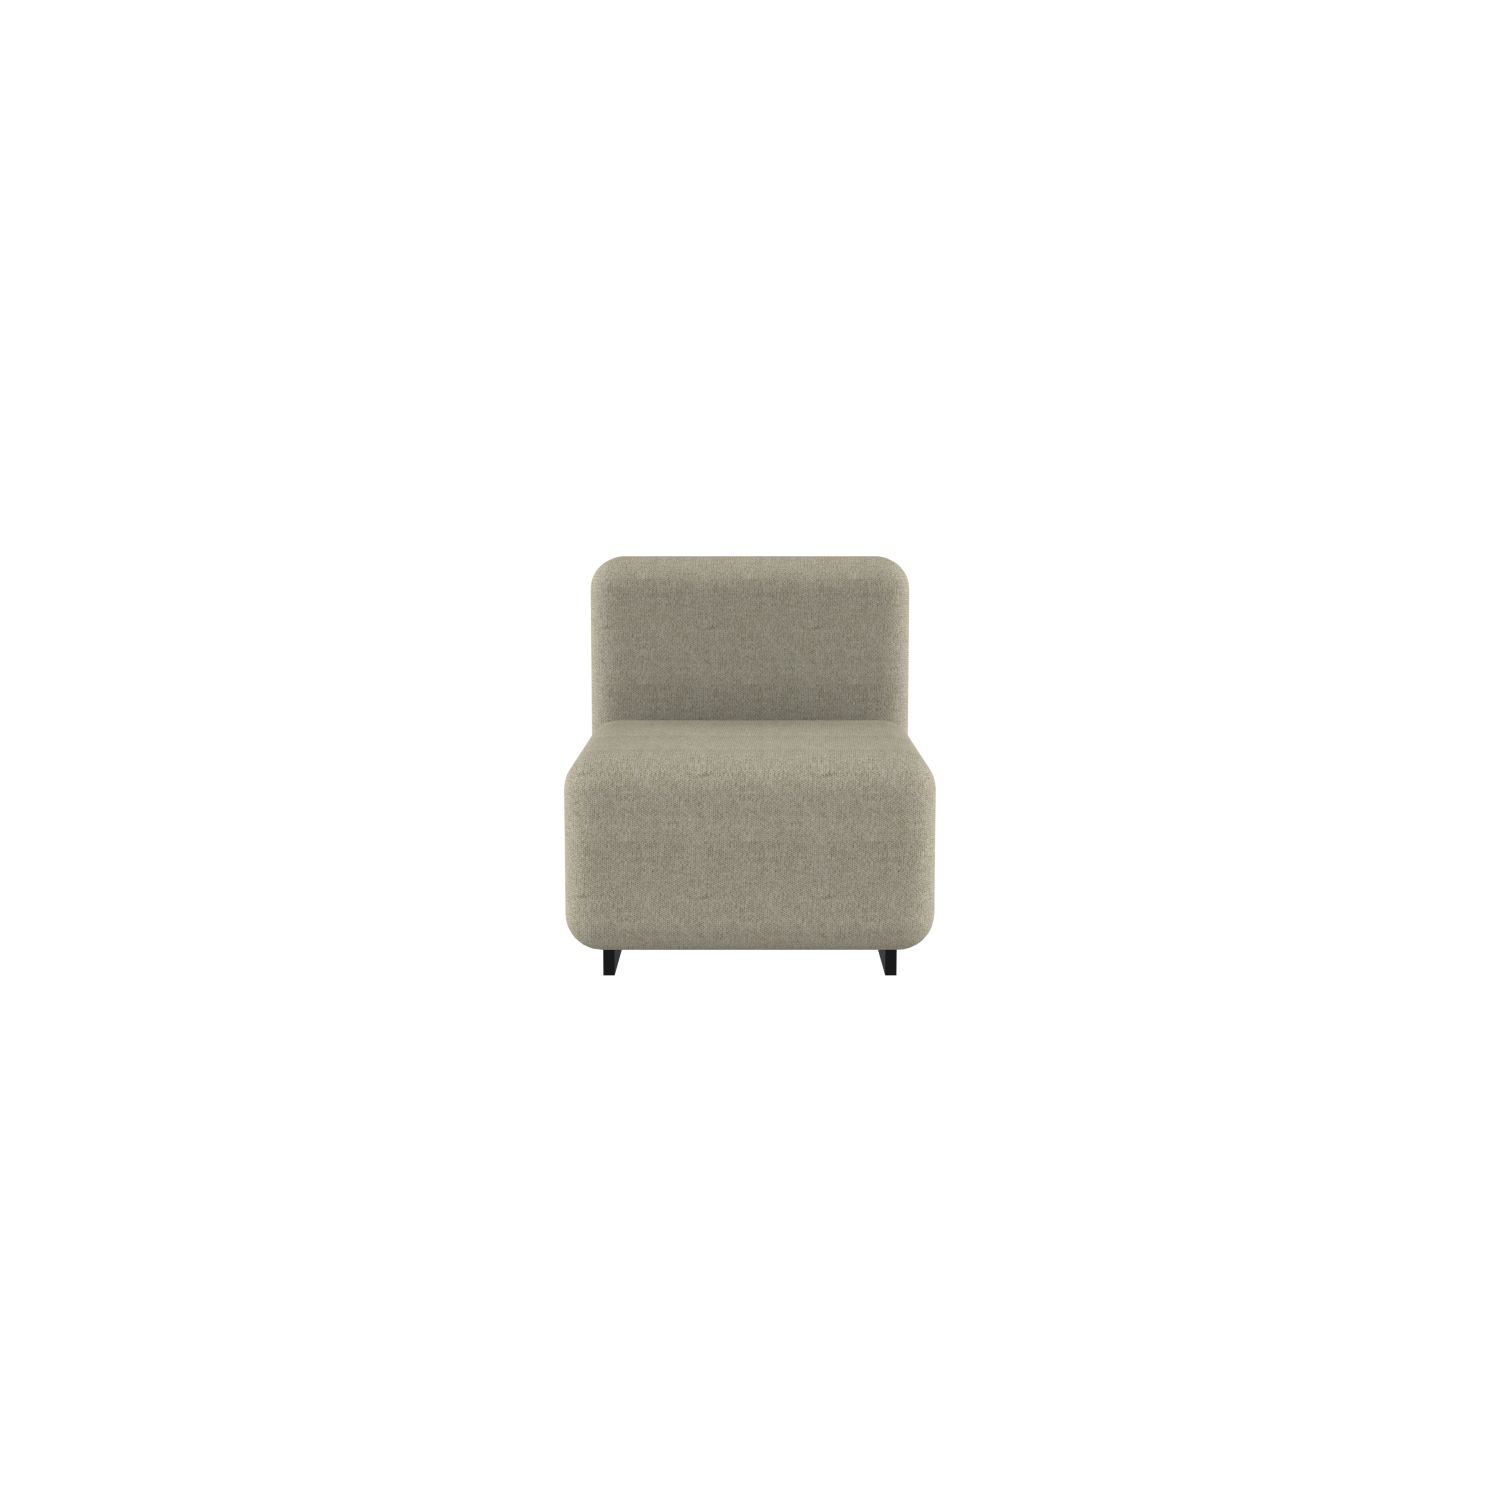 lensvelt fabio novembre balance armchair without armrest moss stone grey 11 black ral9005